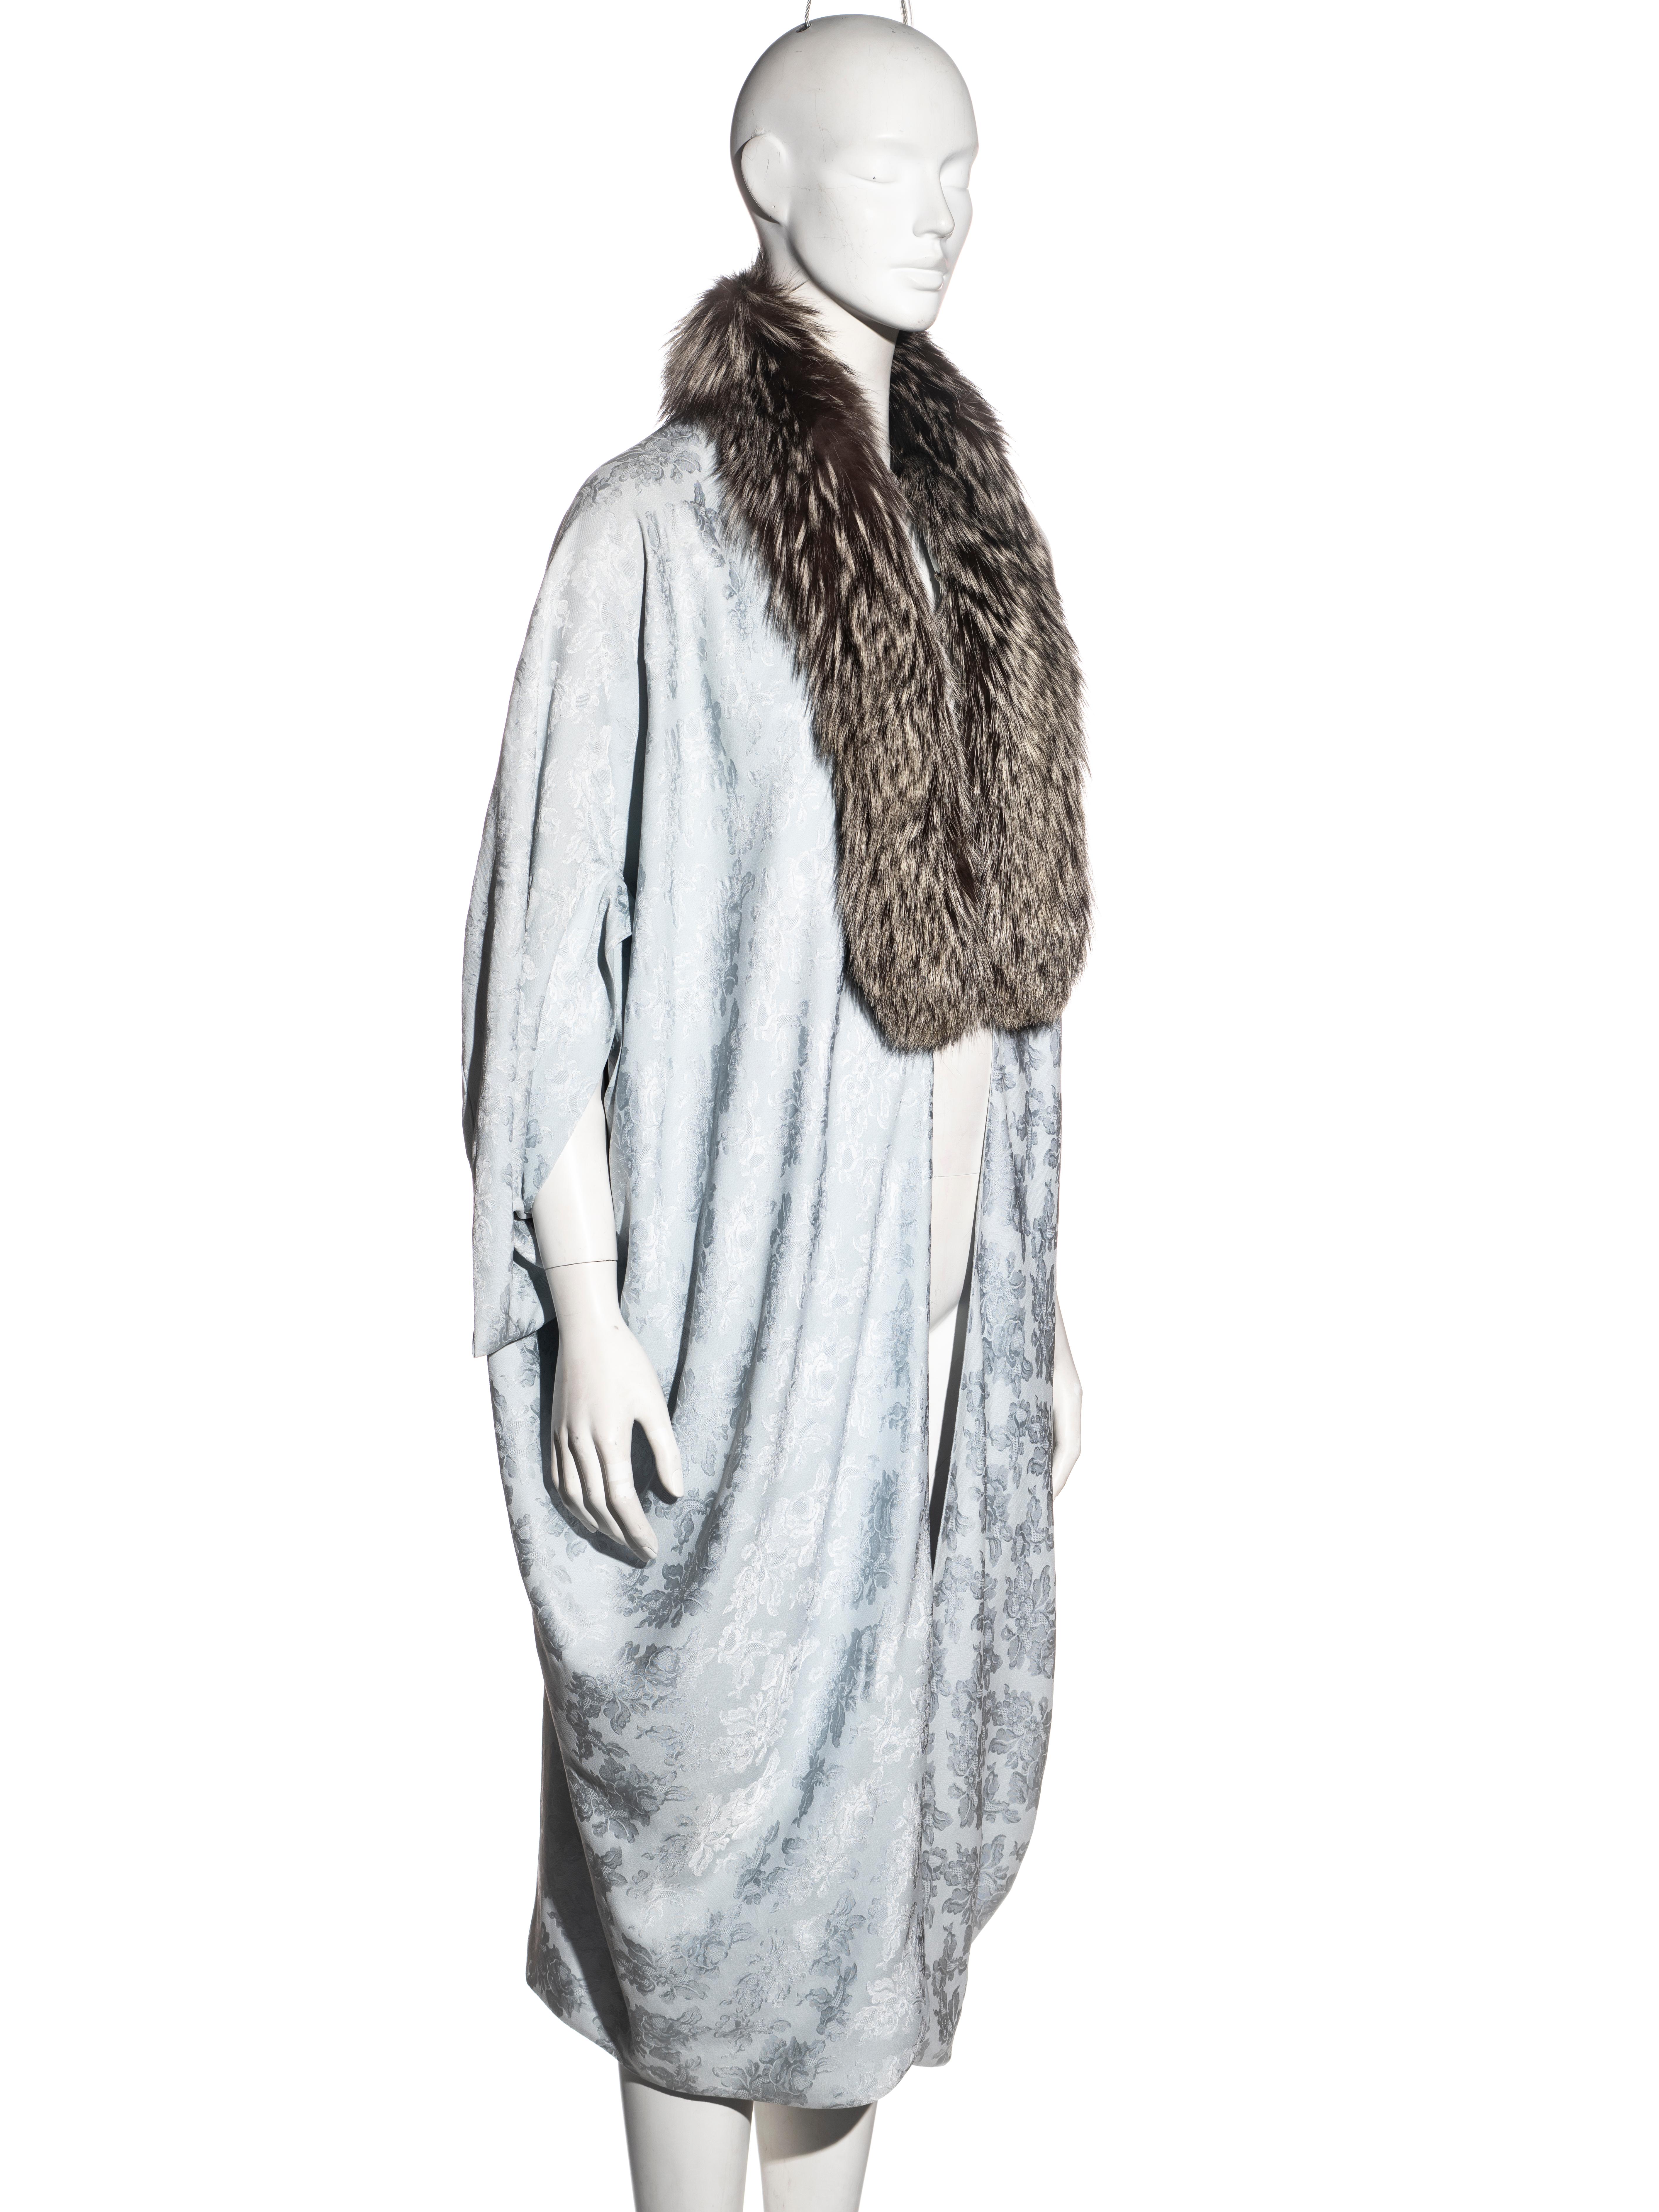 Women's Christian Dior by John Galliano blue cashmere wool and fox fur coat, fw 1998